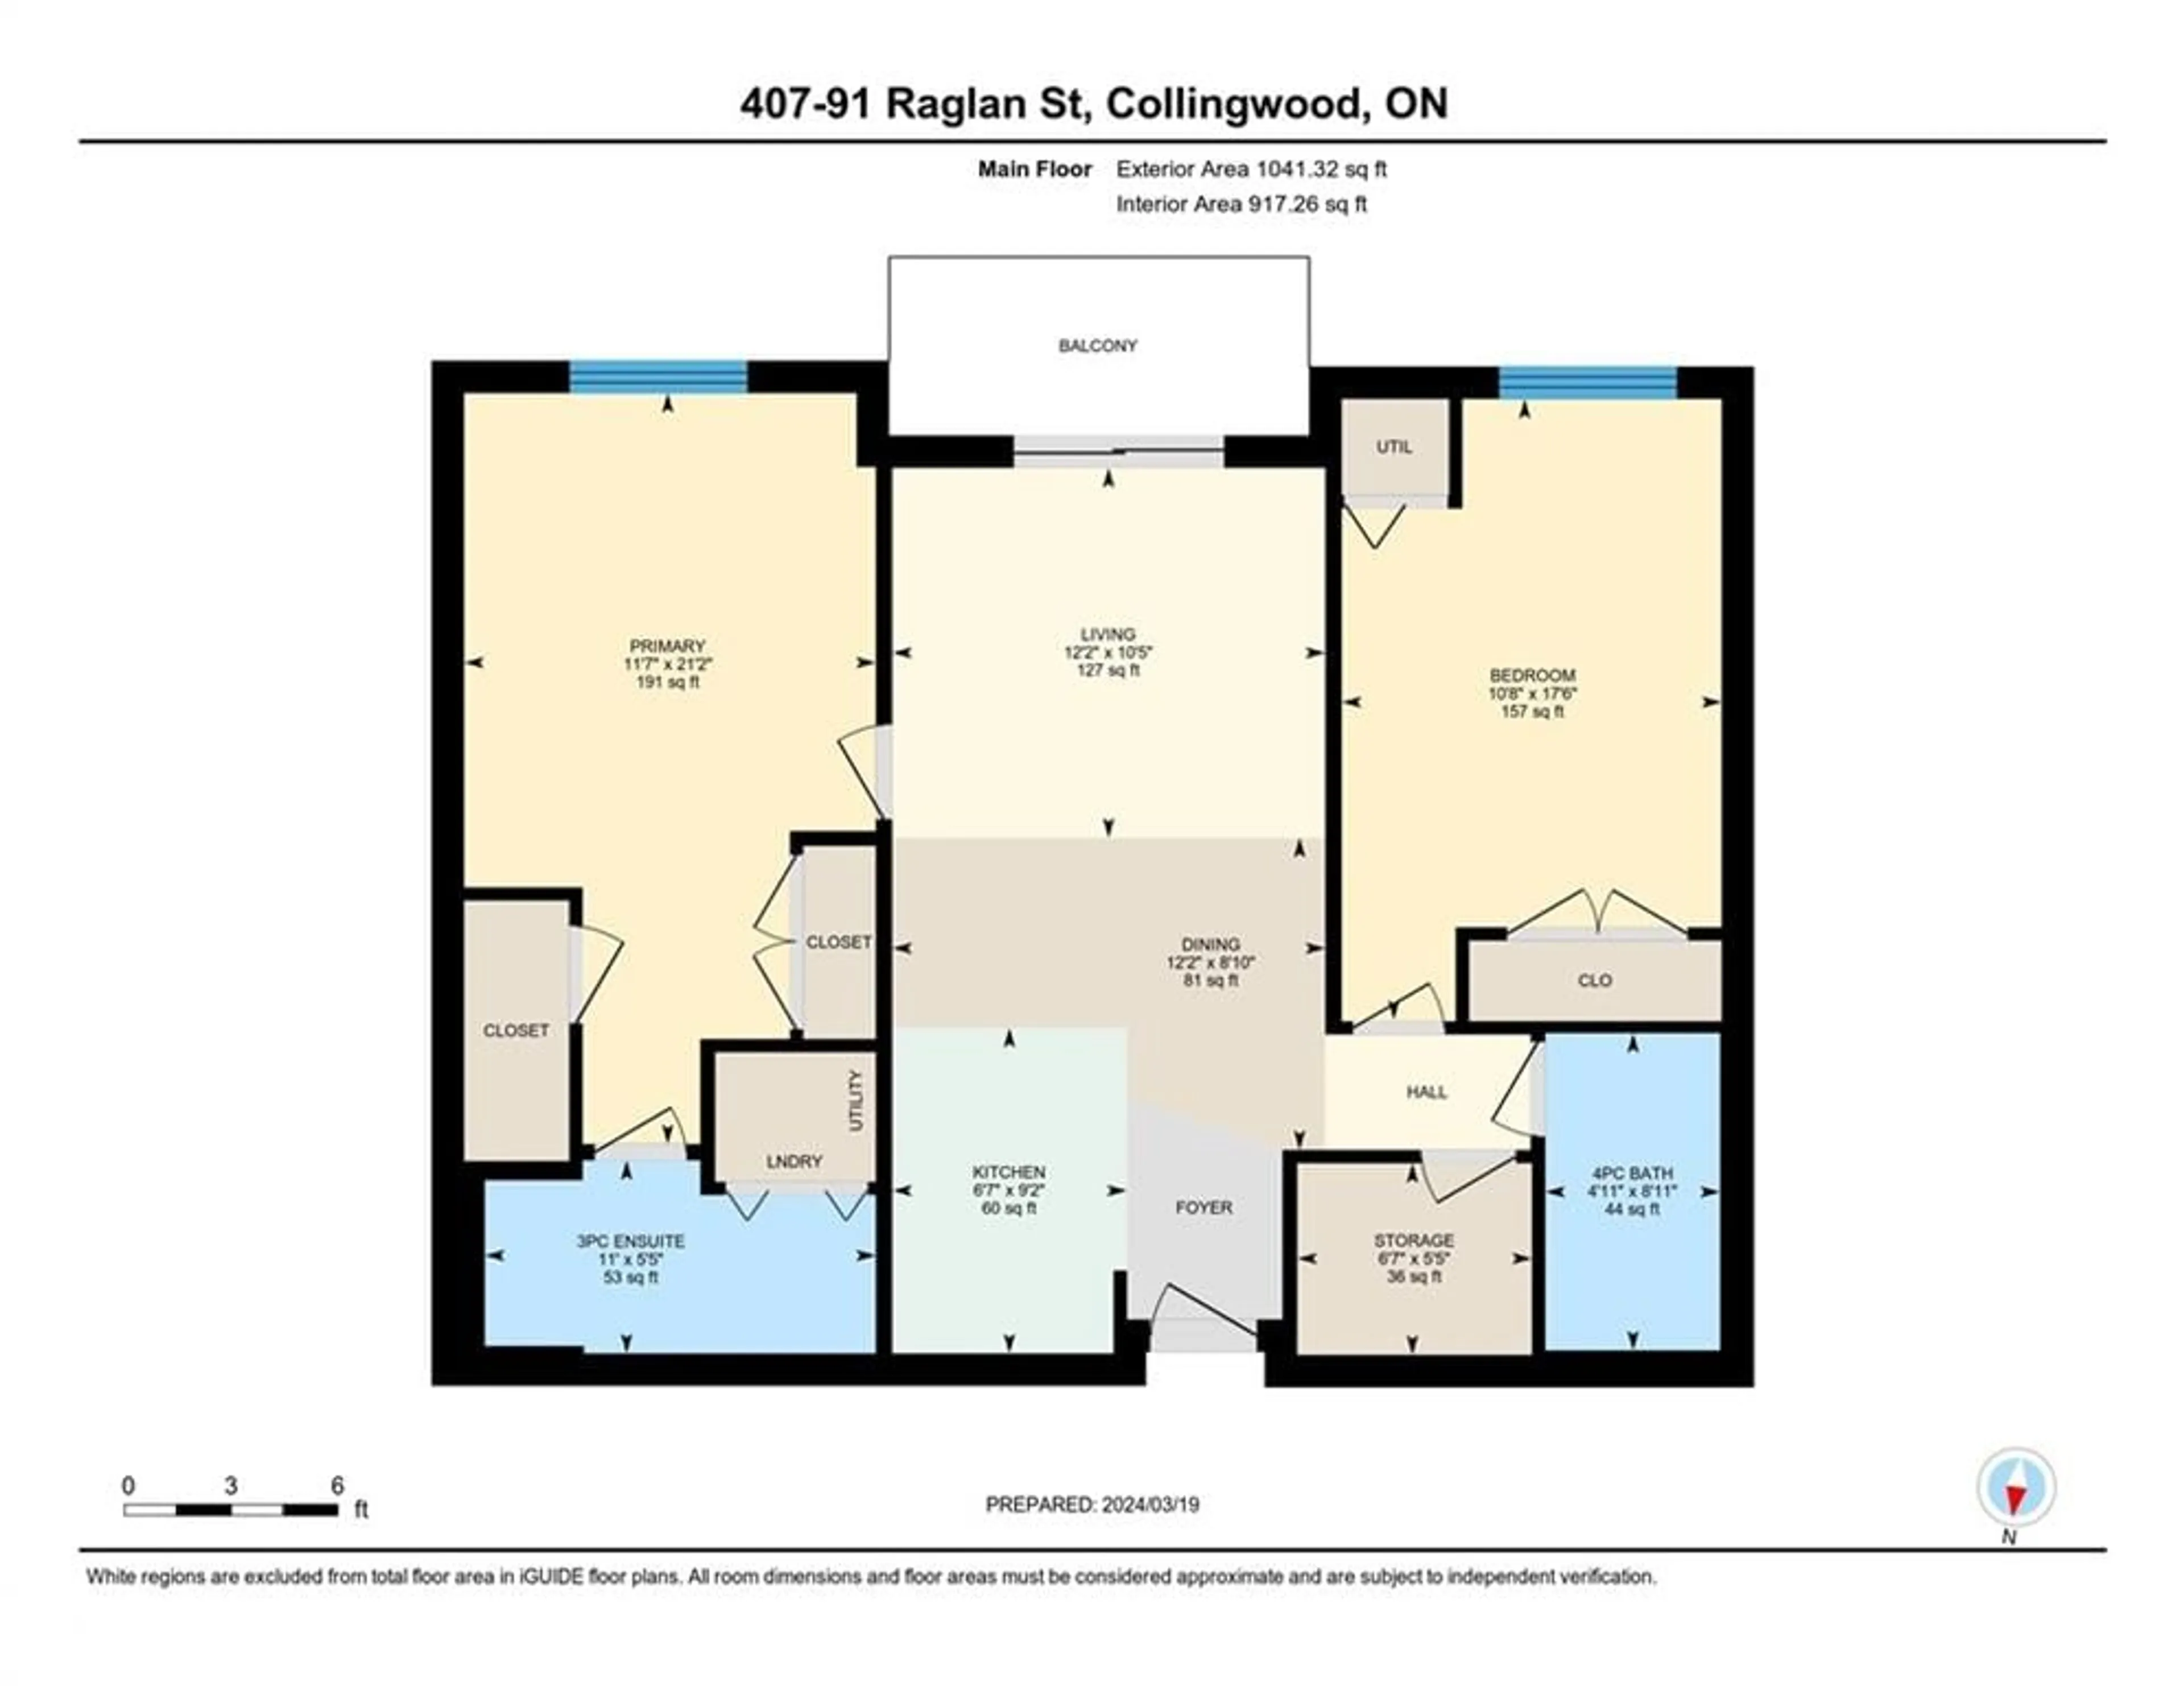 Floor plan for 91 Raglan St #407, Collingwood Ontario L9Y 0B2